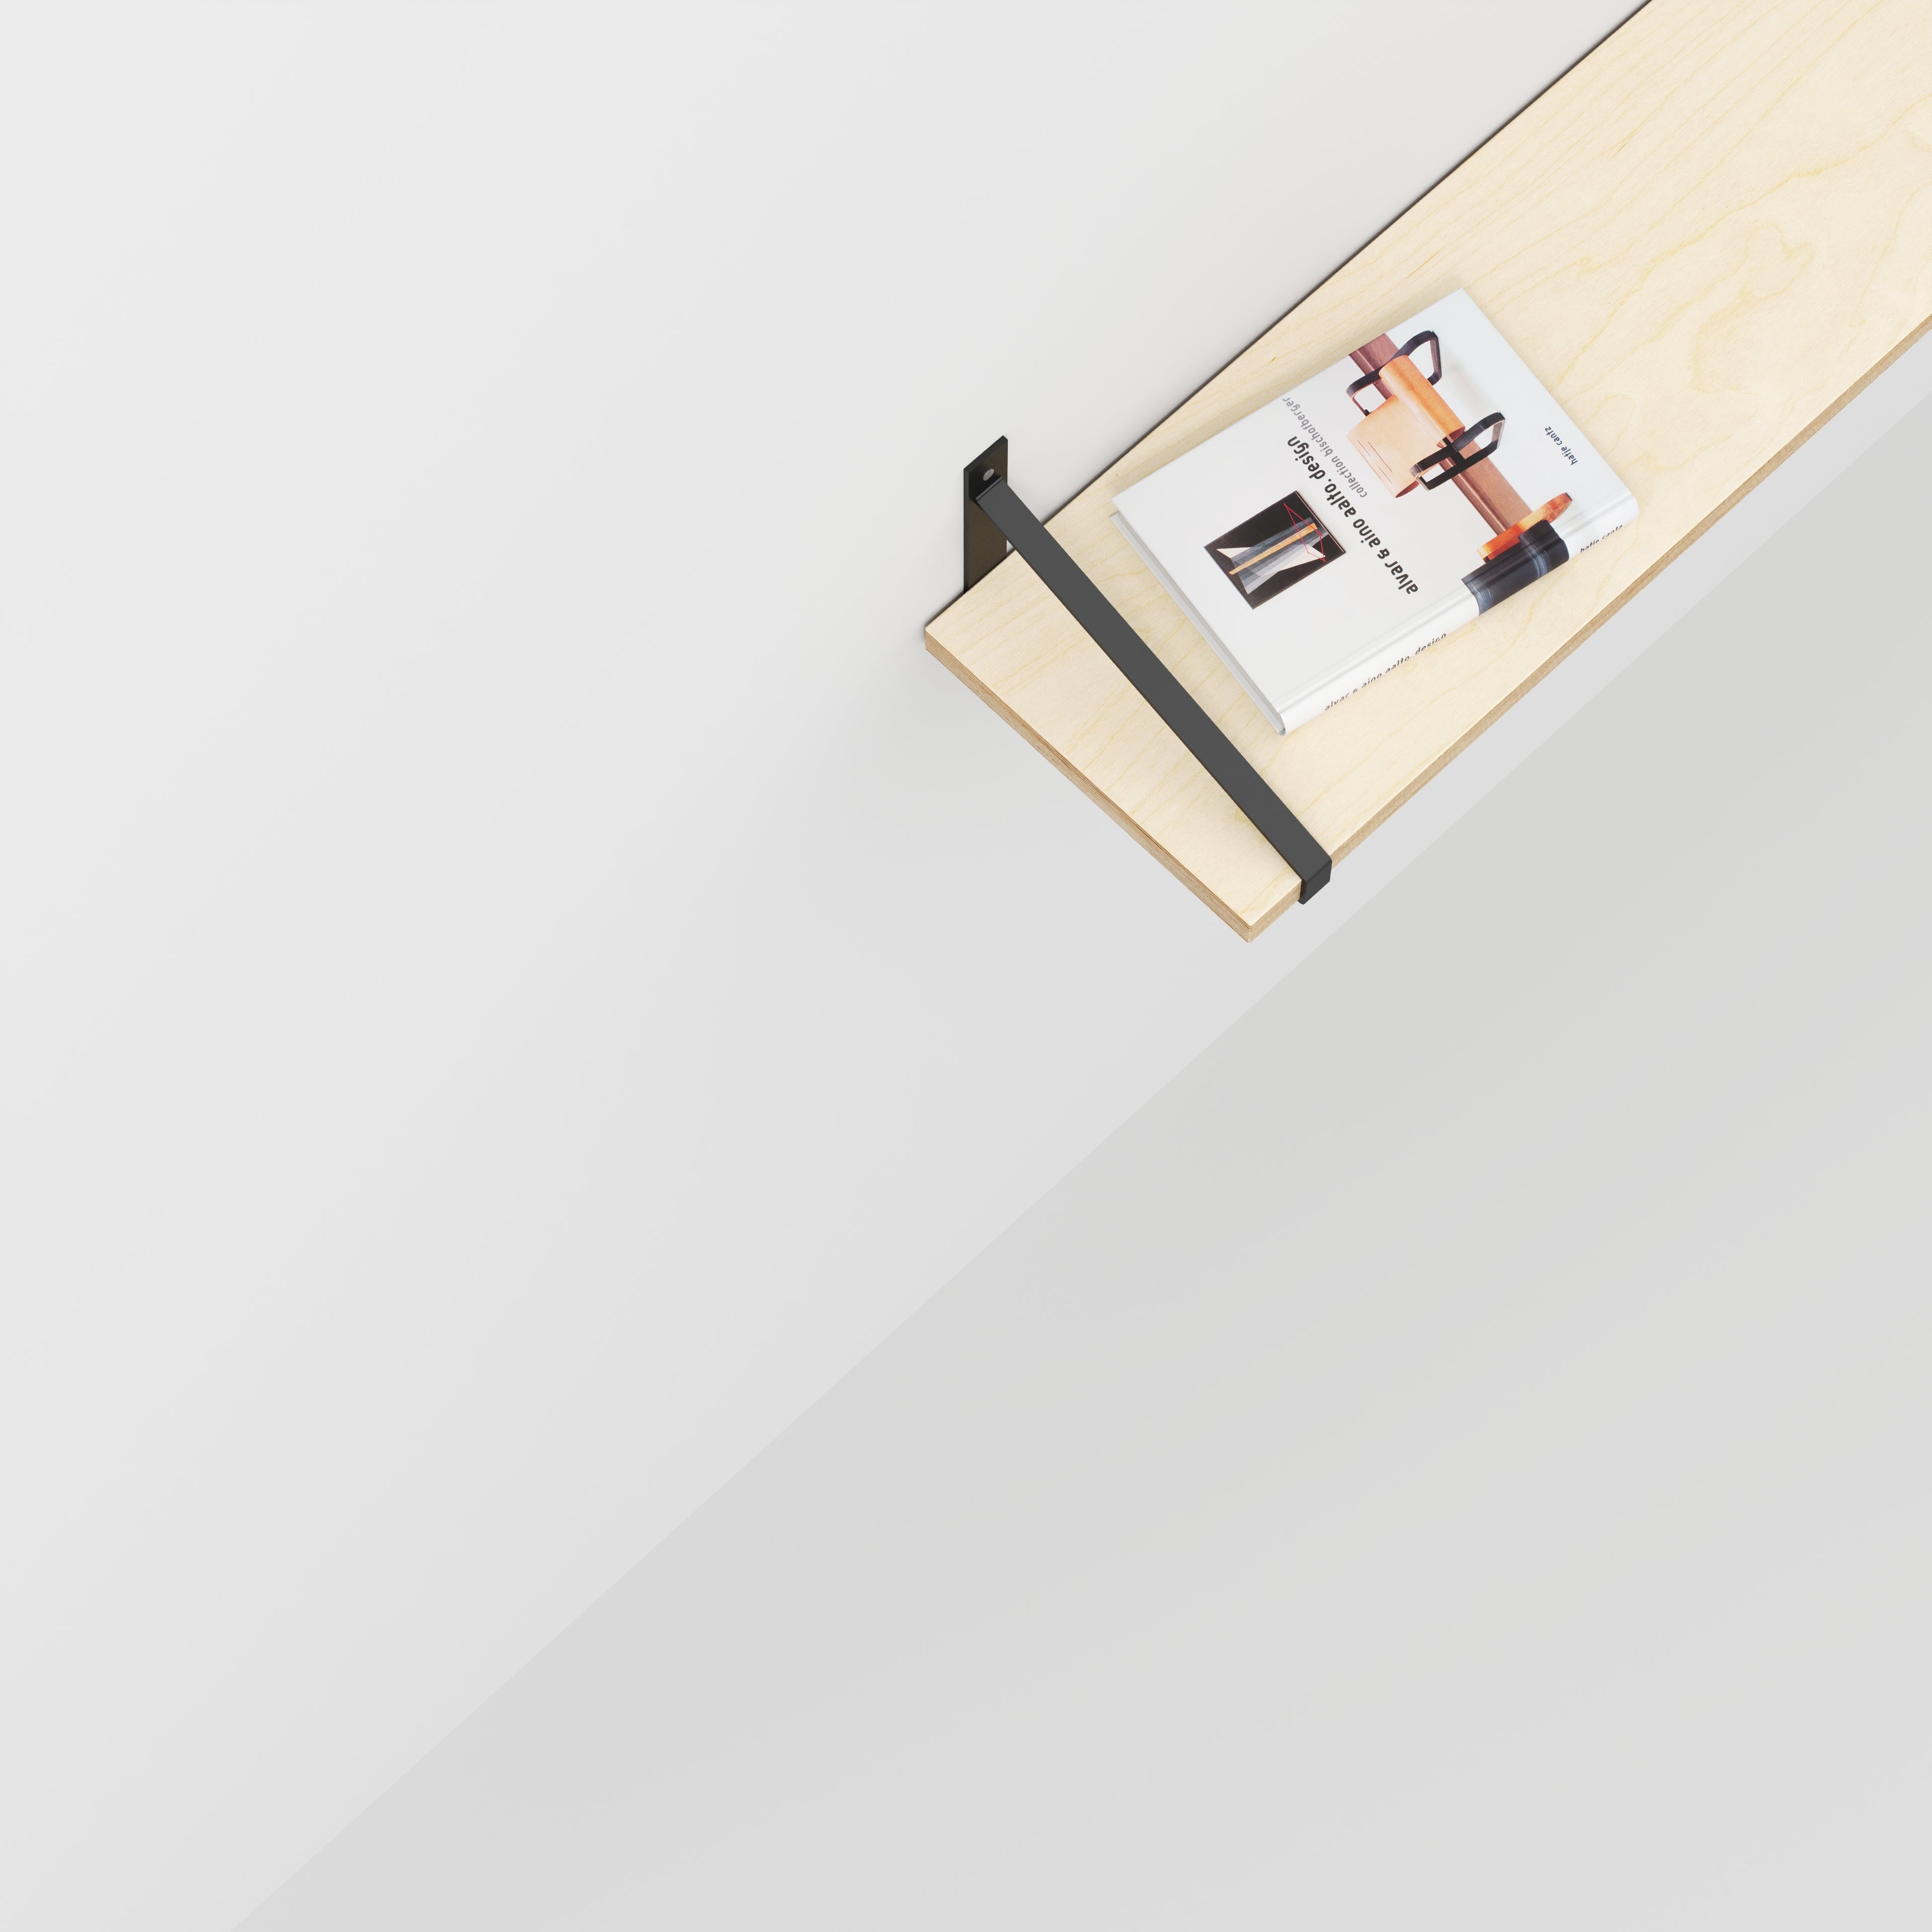 Custom Plywood Wall Shelf with Suspense Brackets